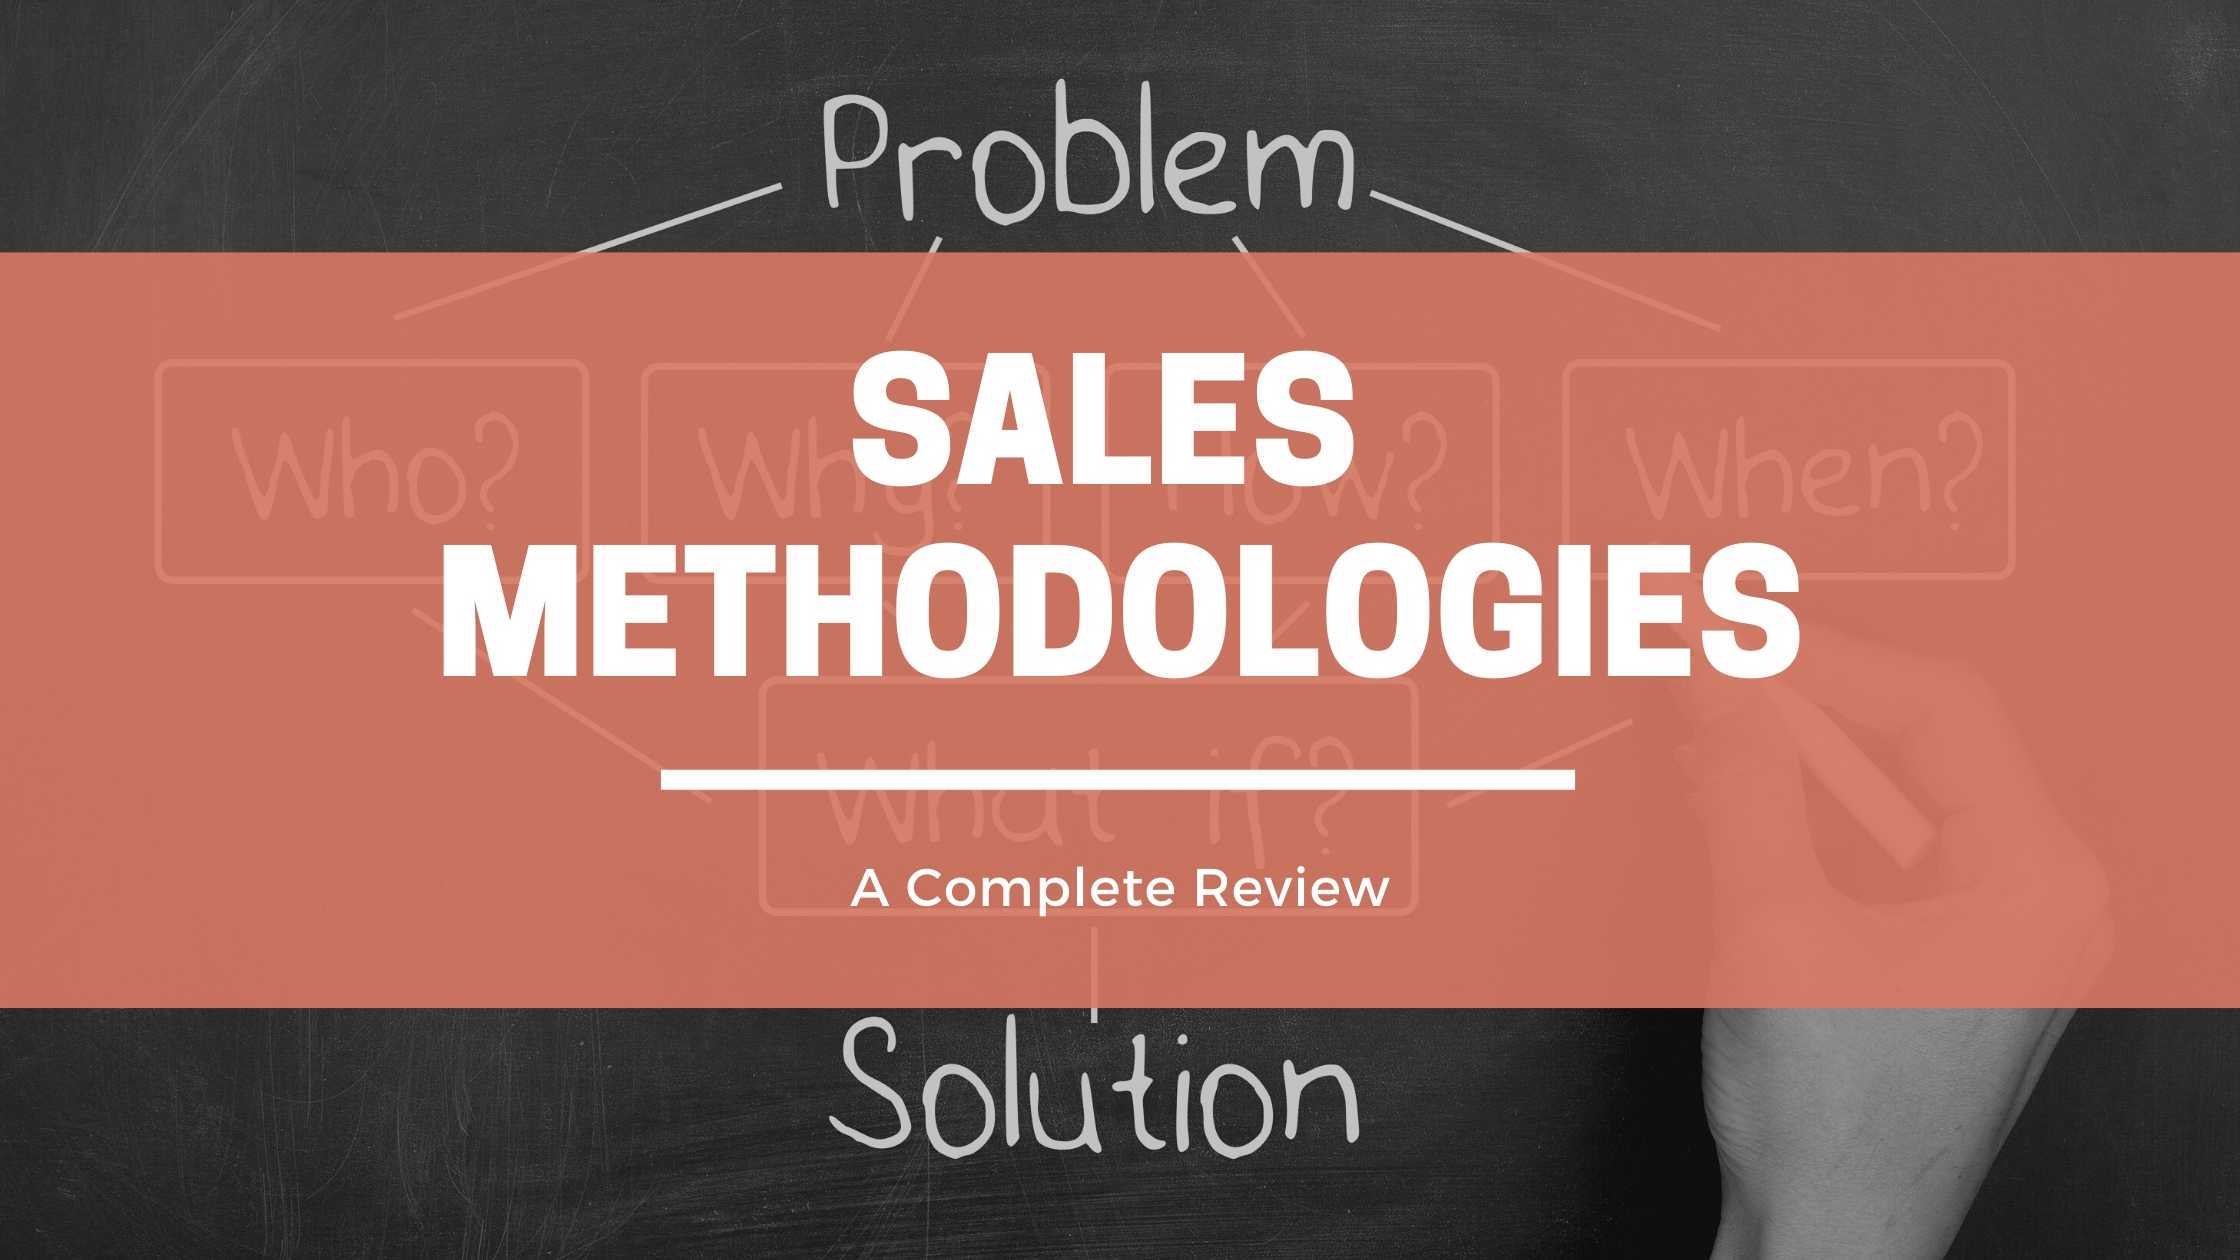 Sales methodologies header image with problem solving background.